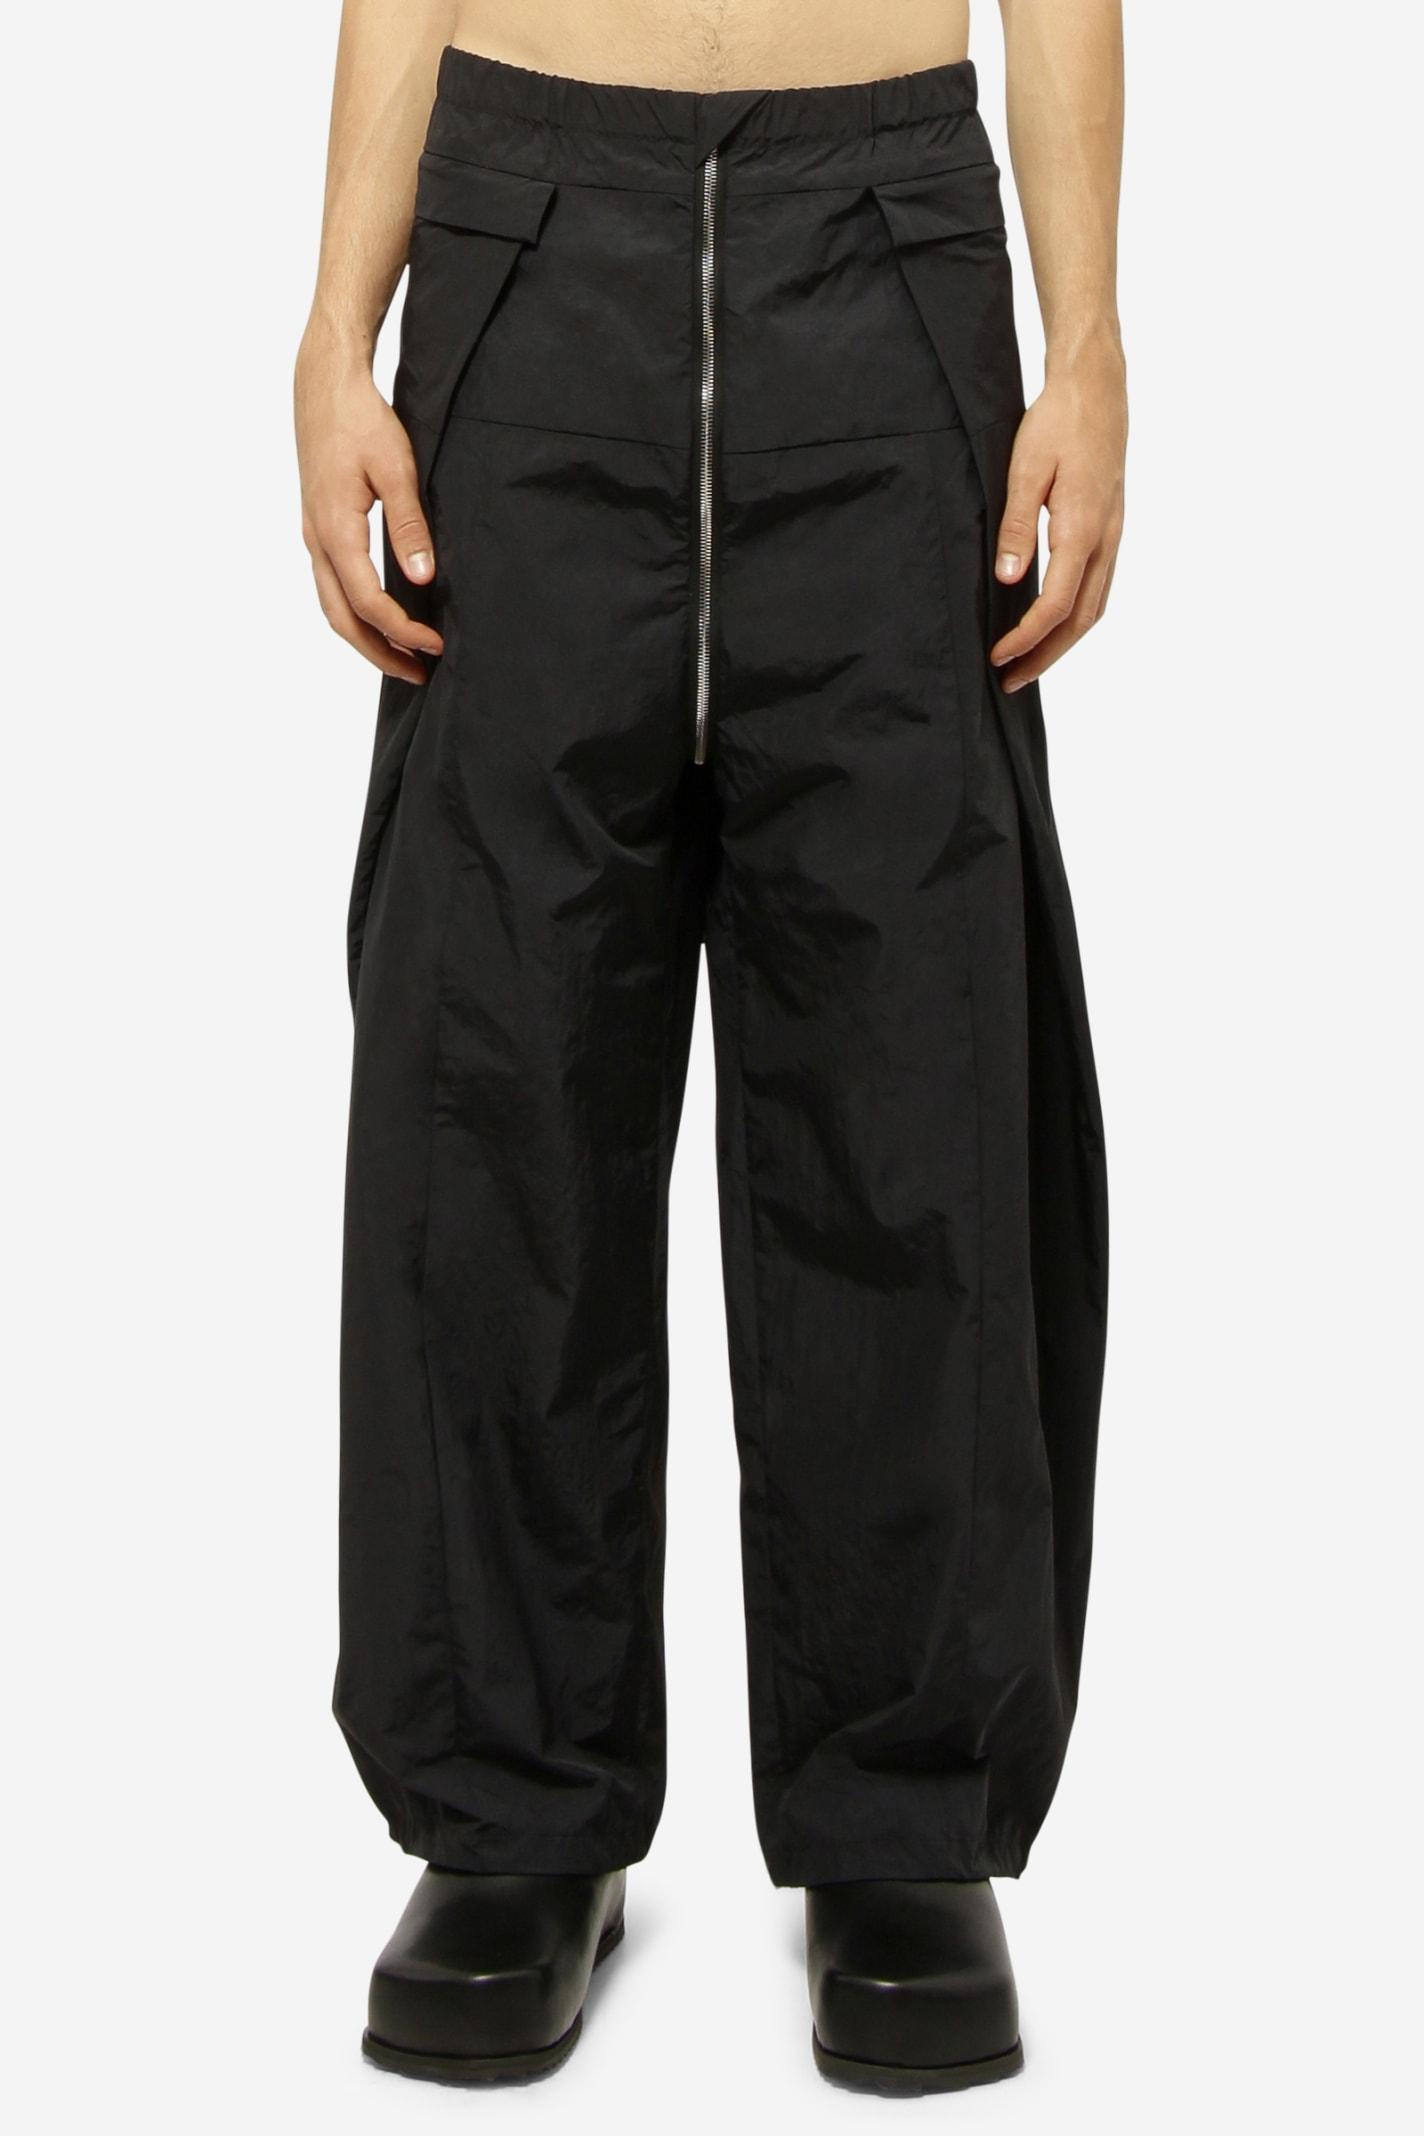 Craig Green Packable Pants in Black for Men